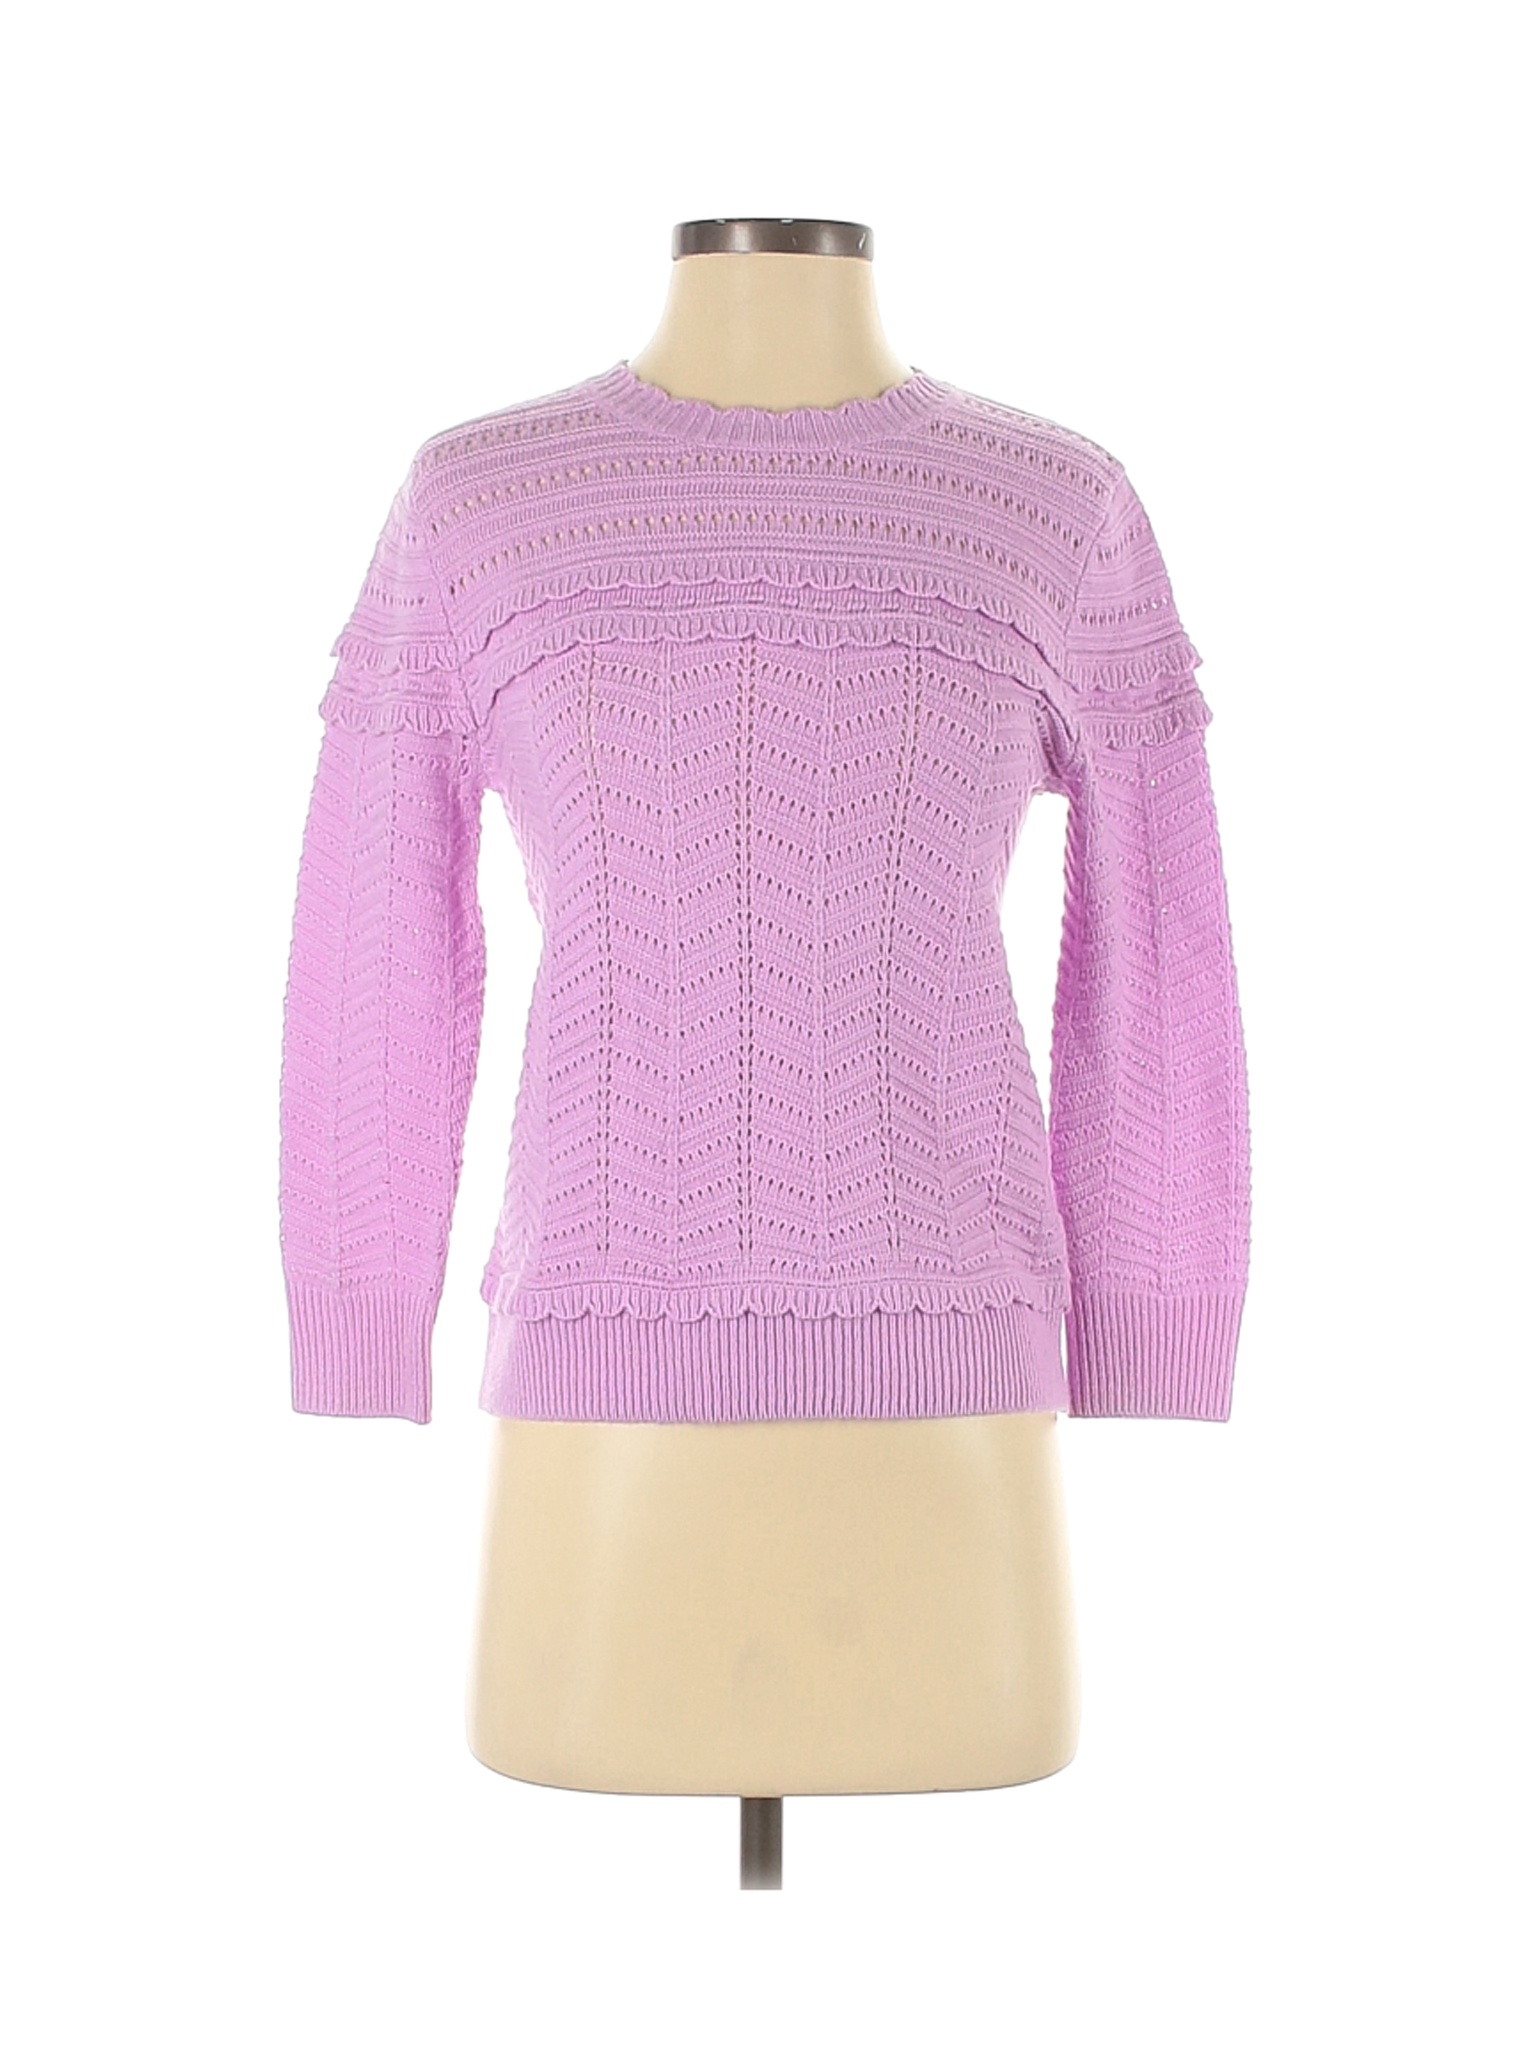 NWT J.Crew Women Purple Pullover Sweater XS | eBay